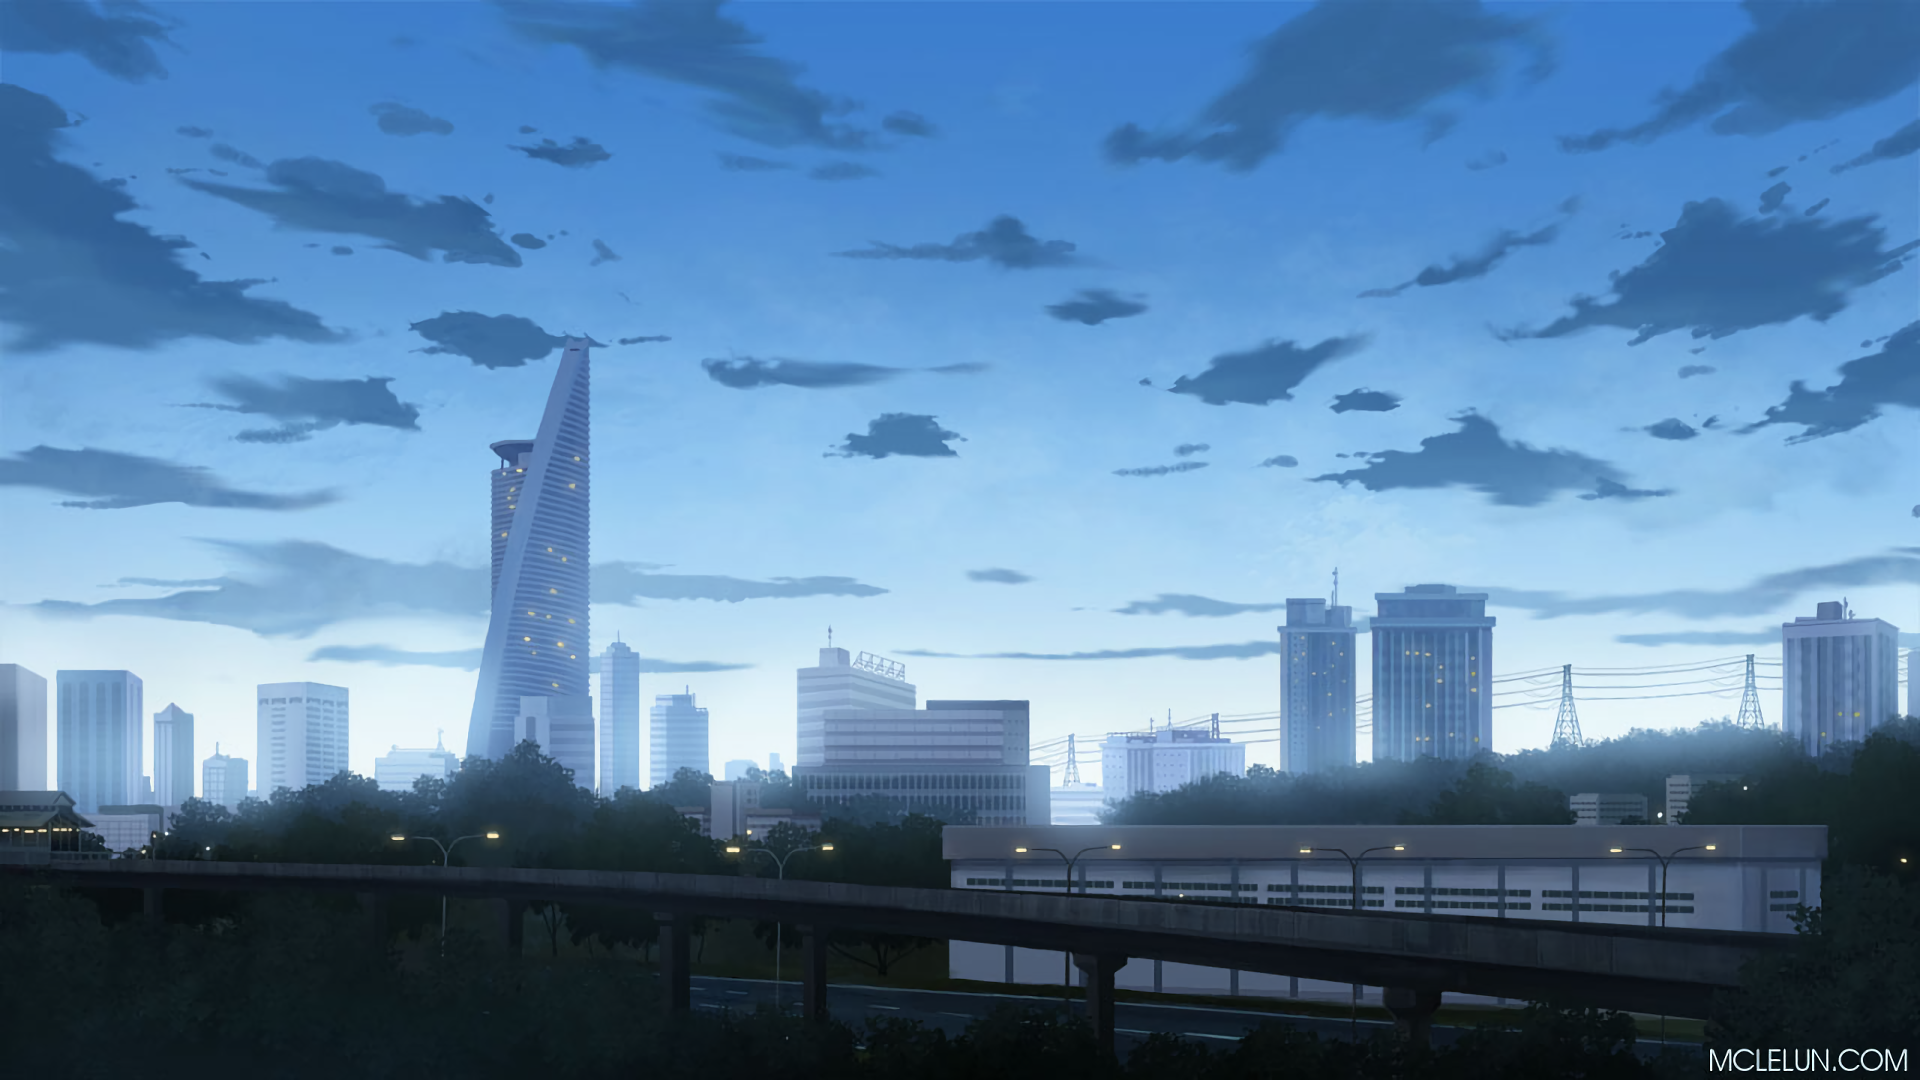 Anime City HD Wallpaper